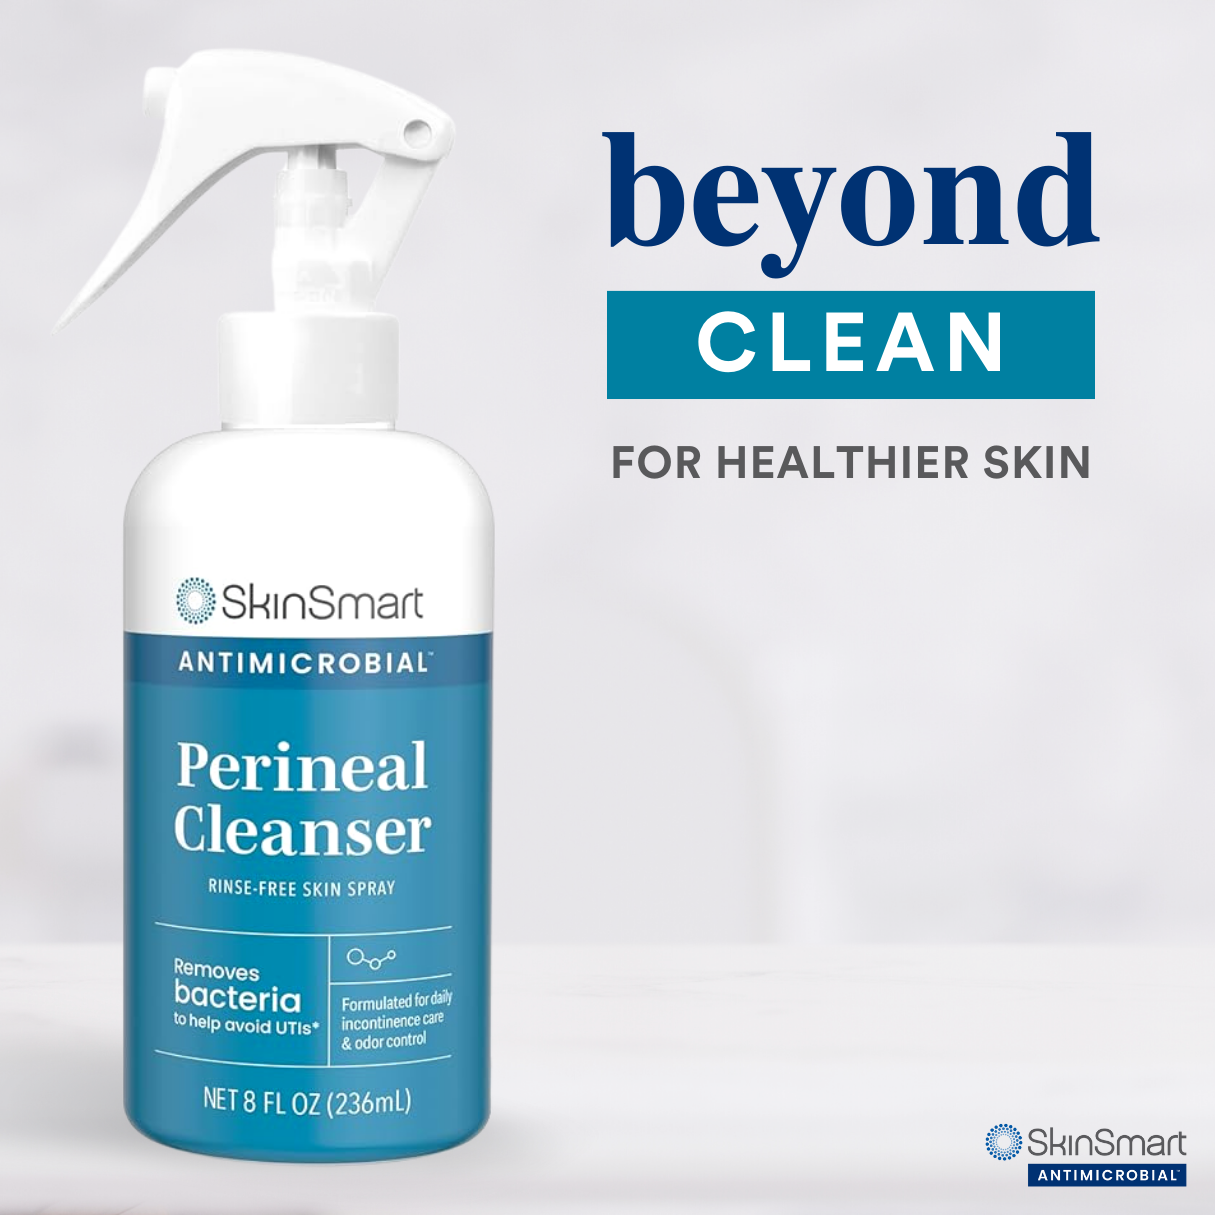 SkinSmart Antimicrobial Perineal Cleanser